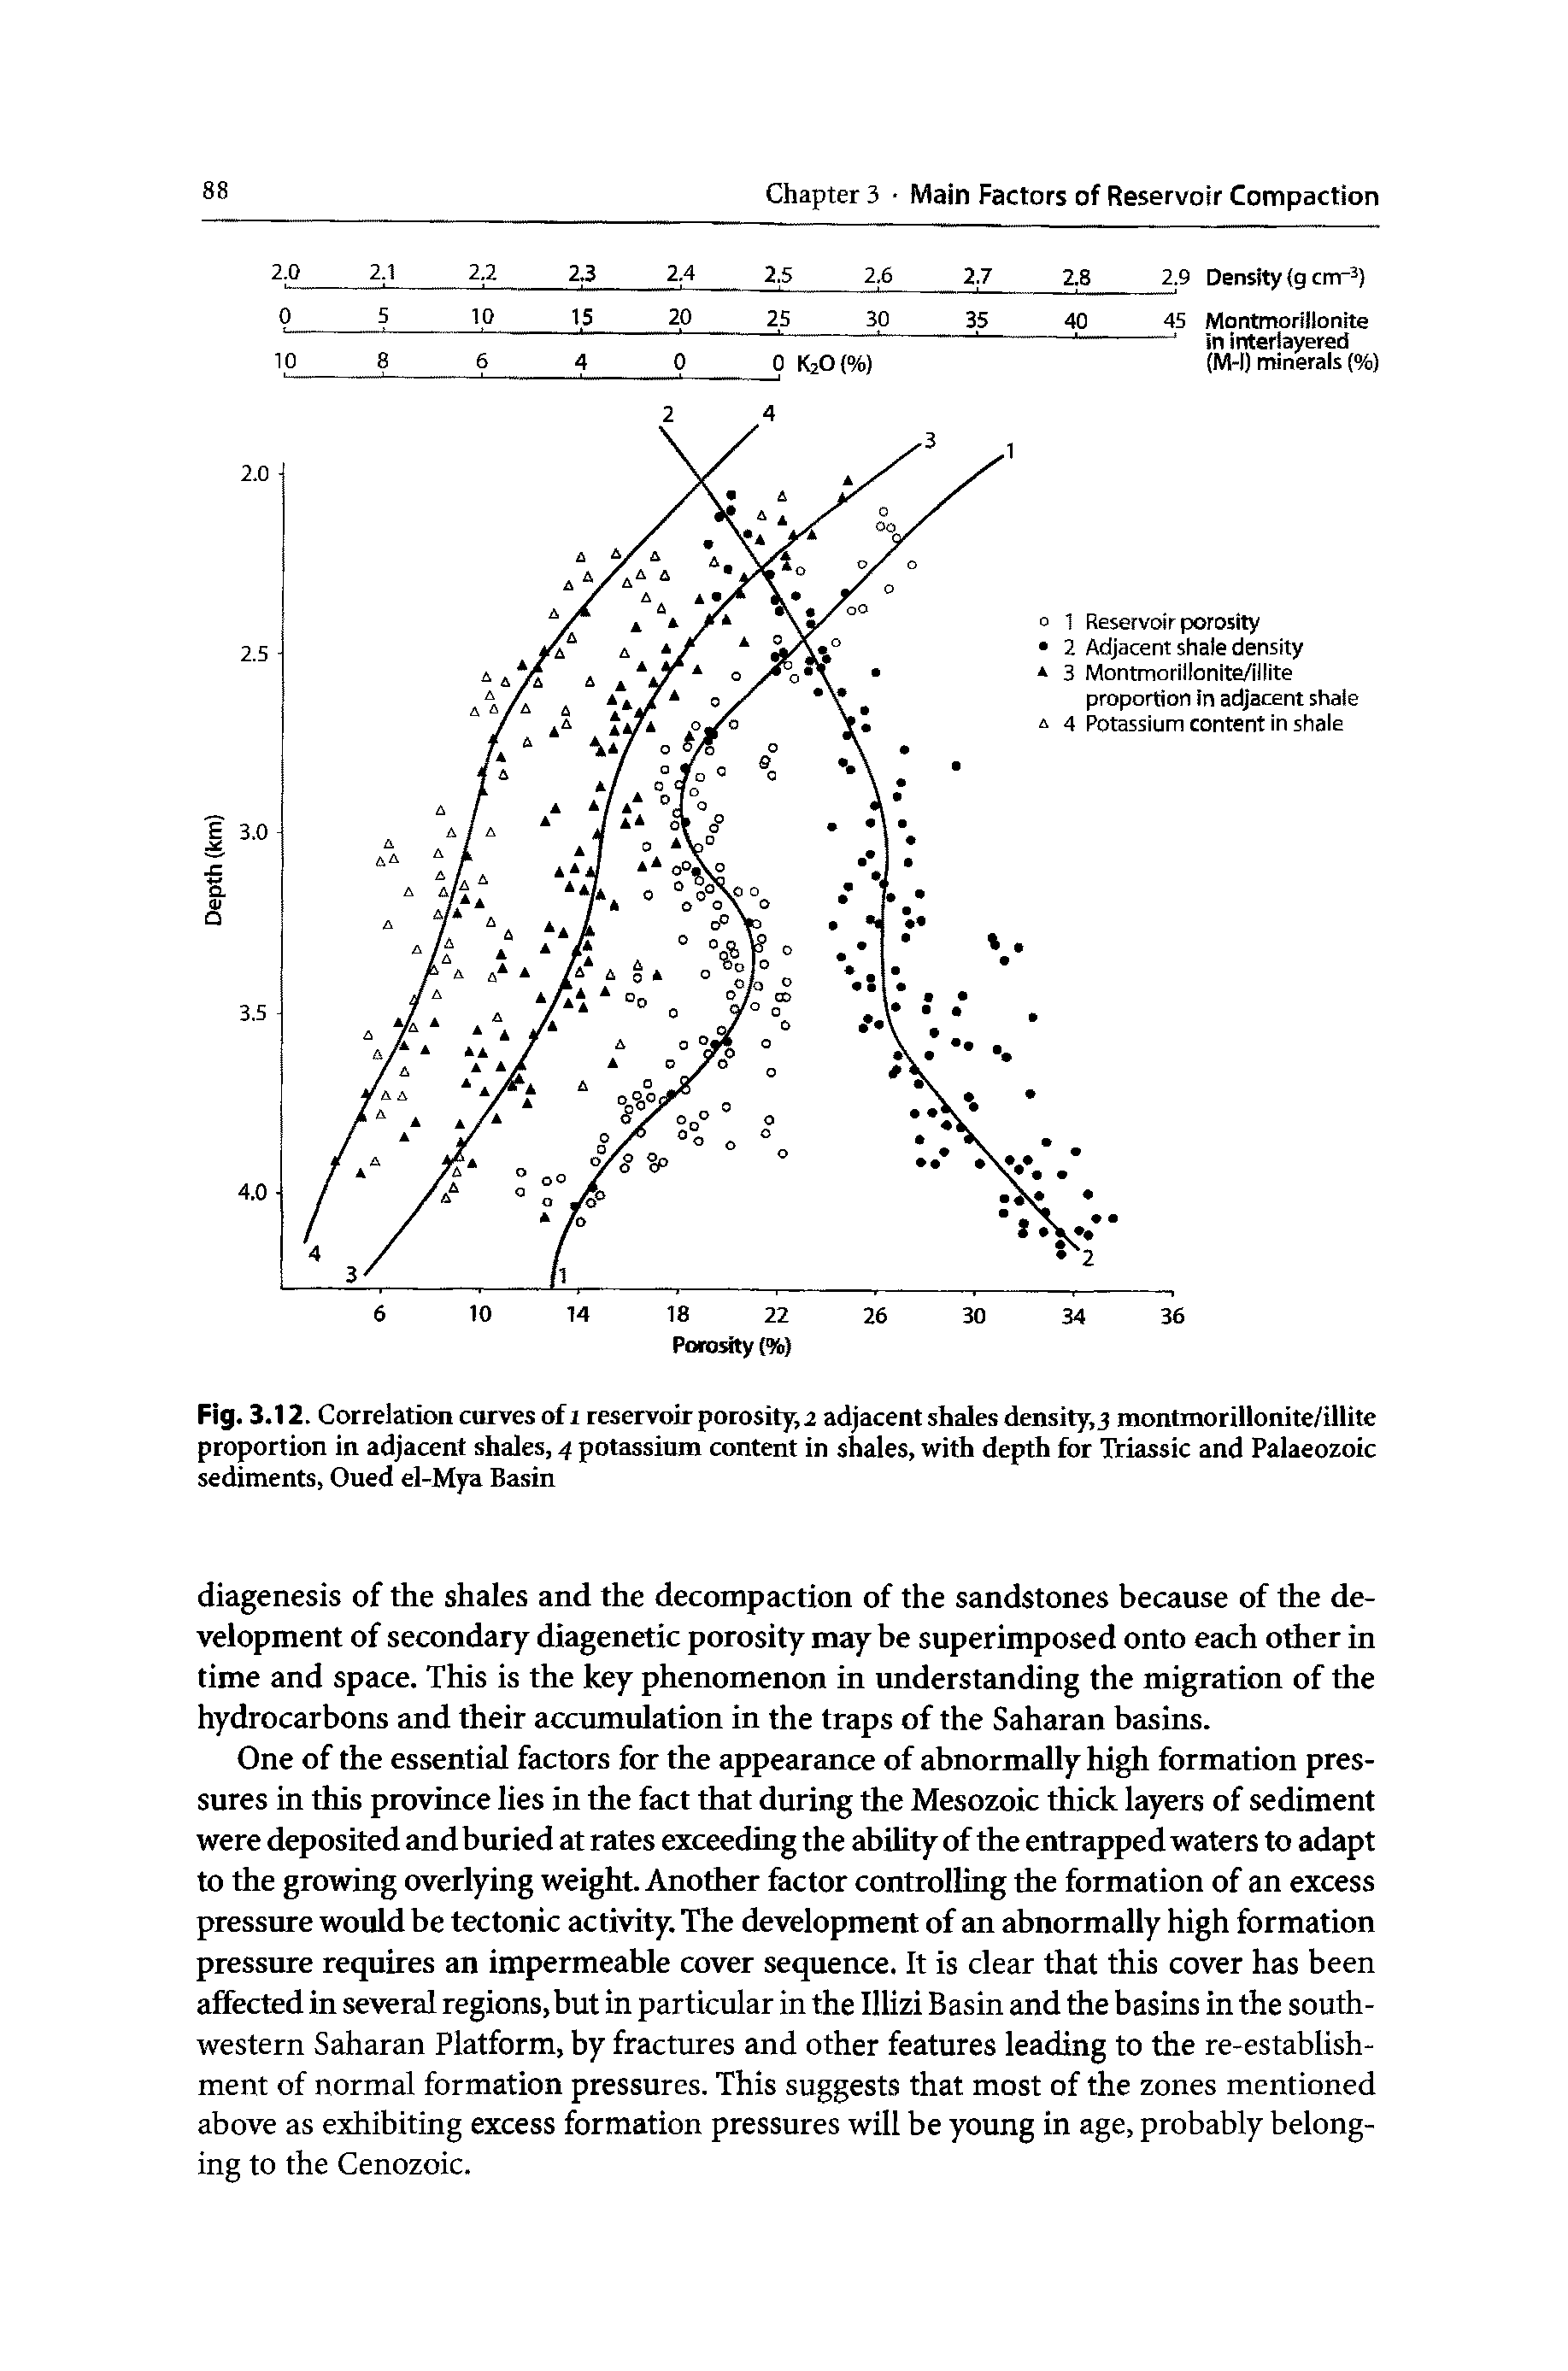 Fig. 3.12. Correlation curves of I reservoir porosity, 2 adjacent shales density, montmorillonite/illite proportion in adjacent shales, 4 potassium content in shales, with depth for Triassic and Palaeozoic sediments, Oued el-Mya Basin...